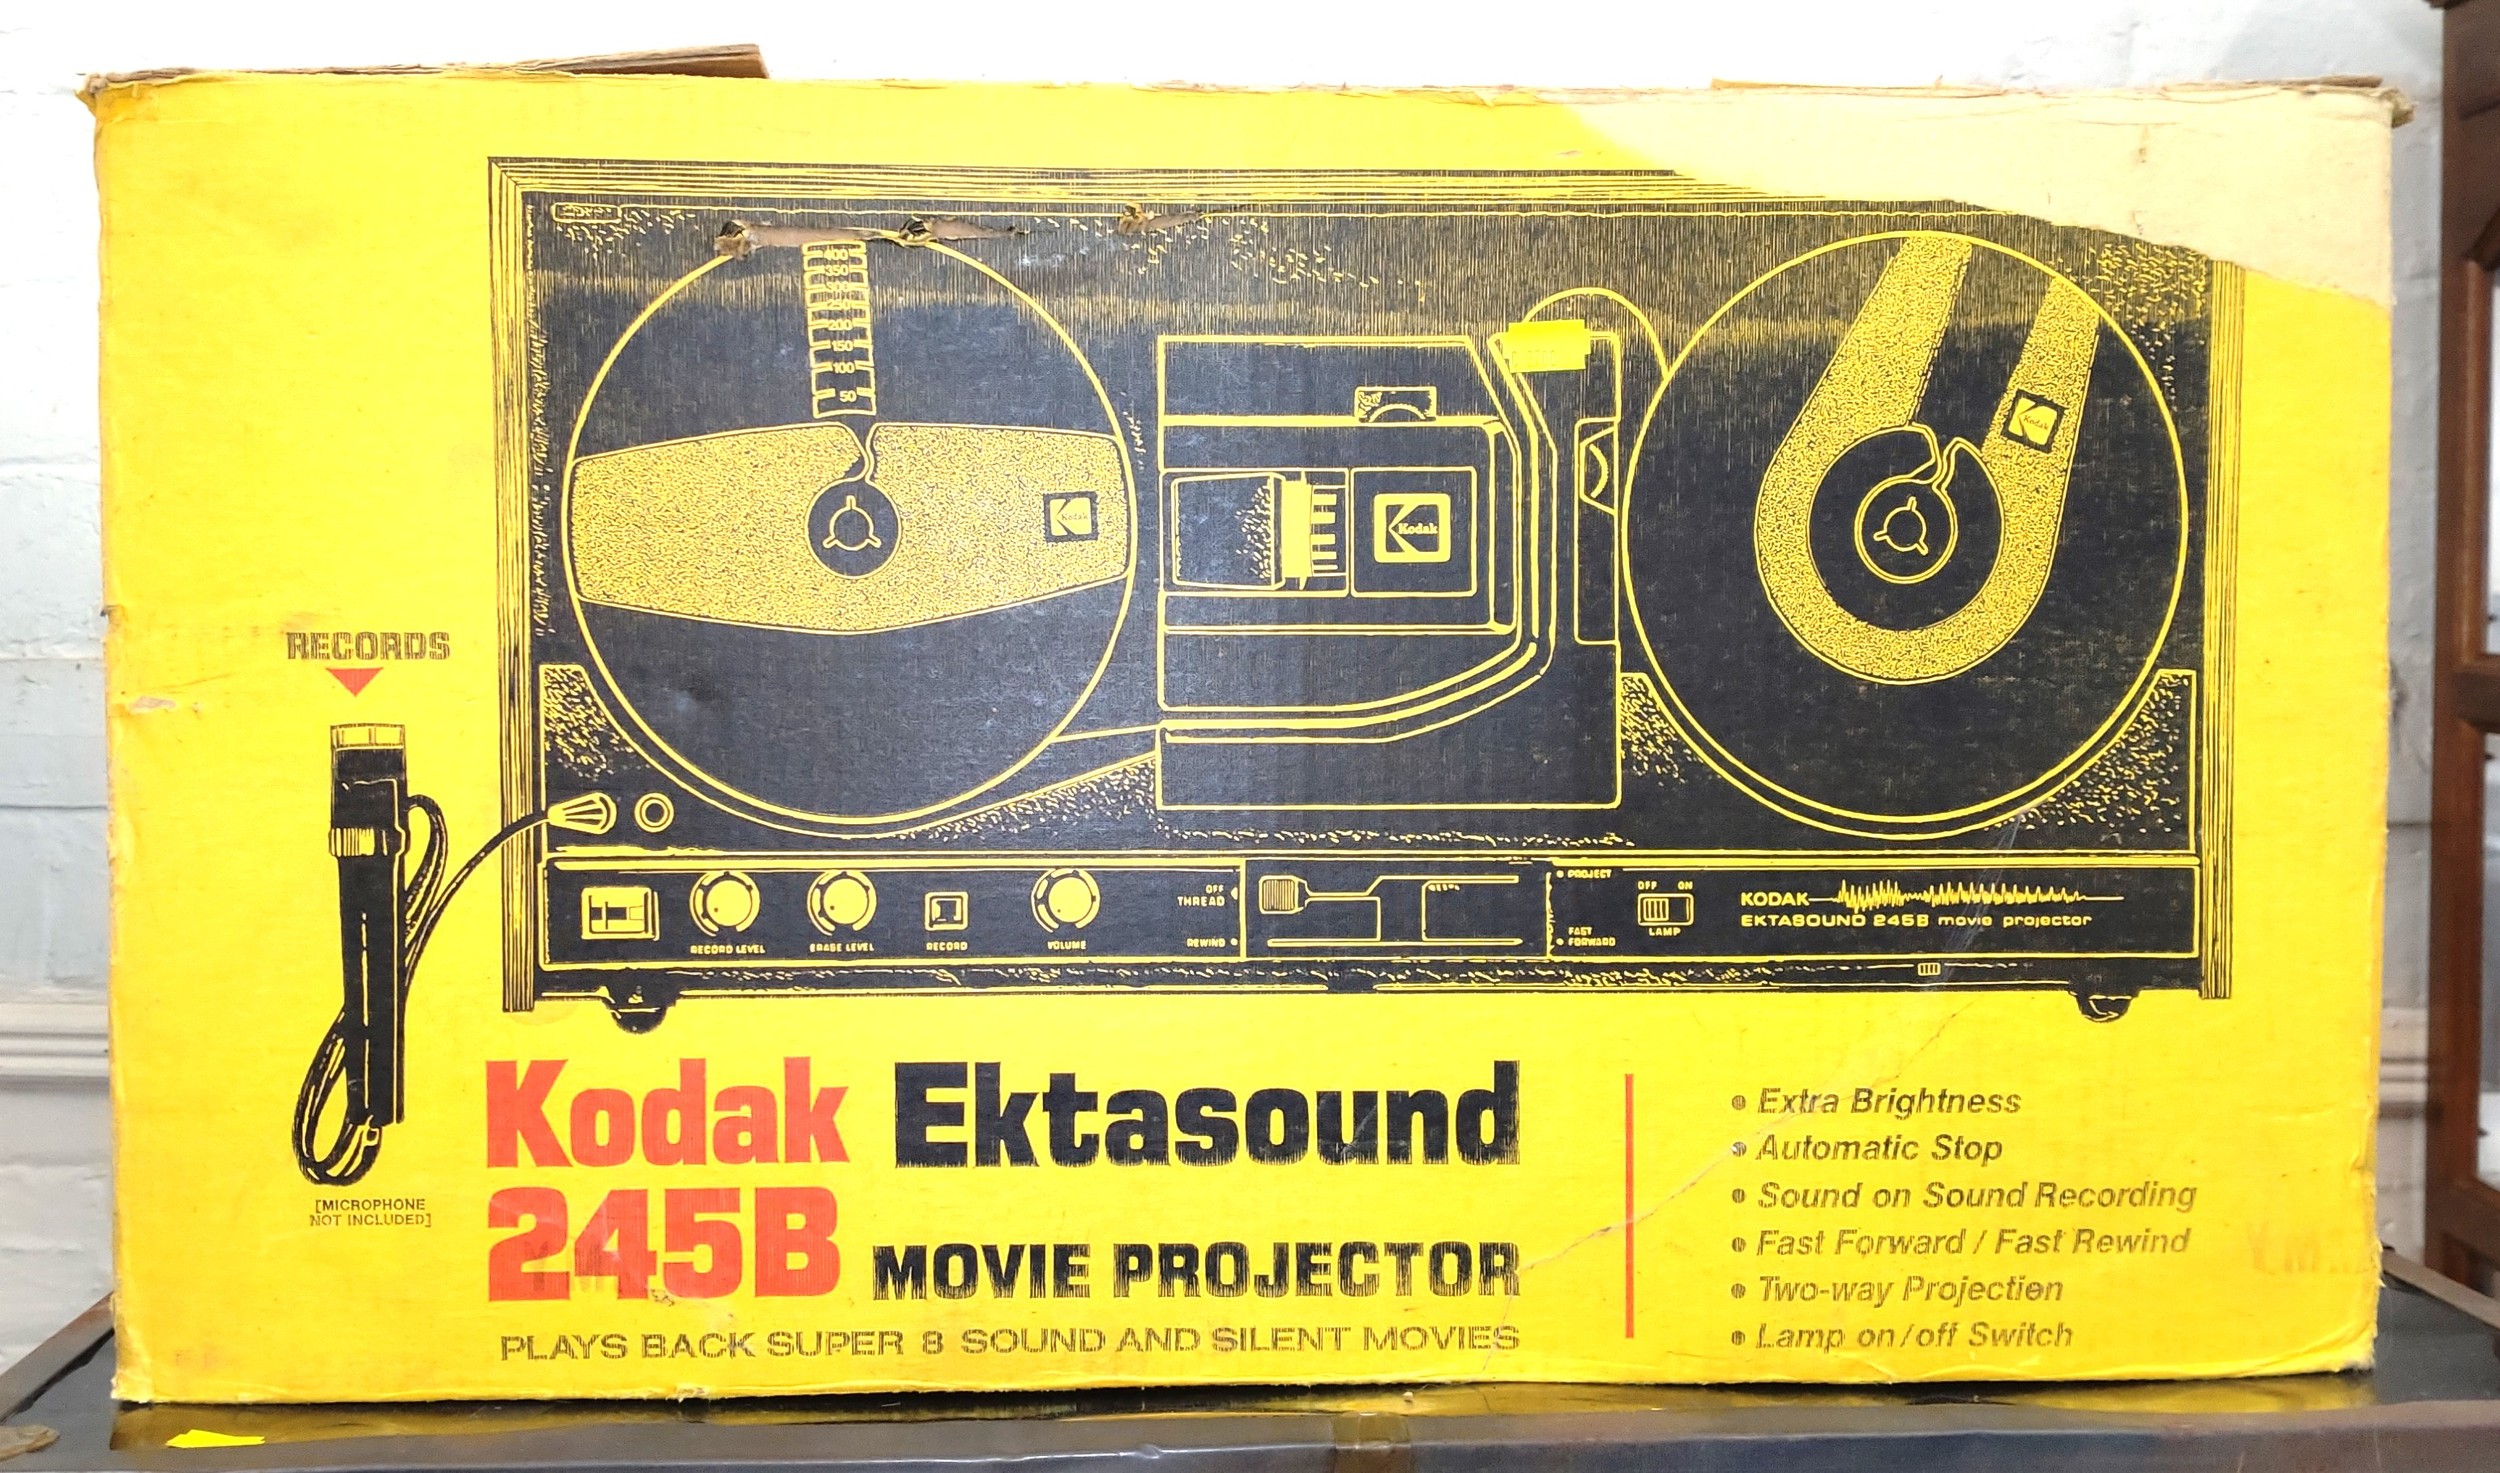 A Kodak Ektasound projector.